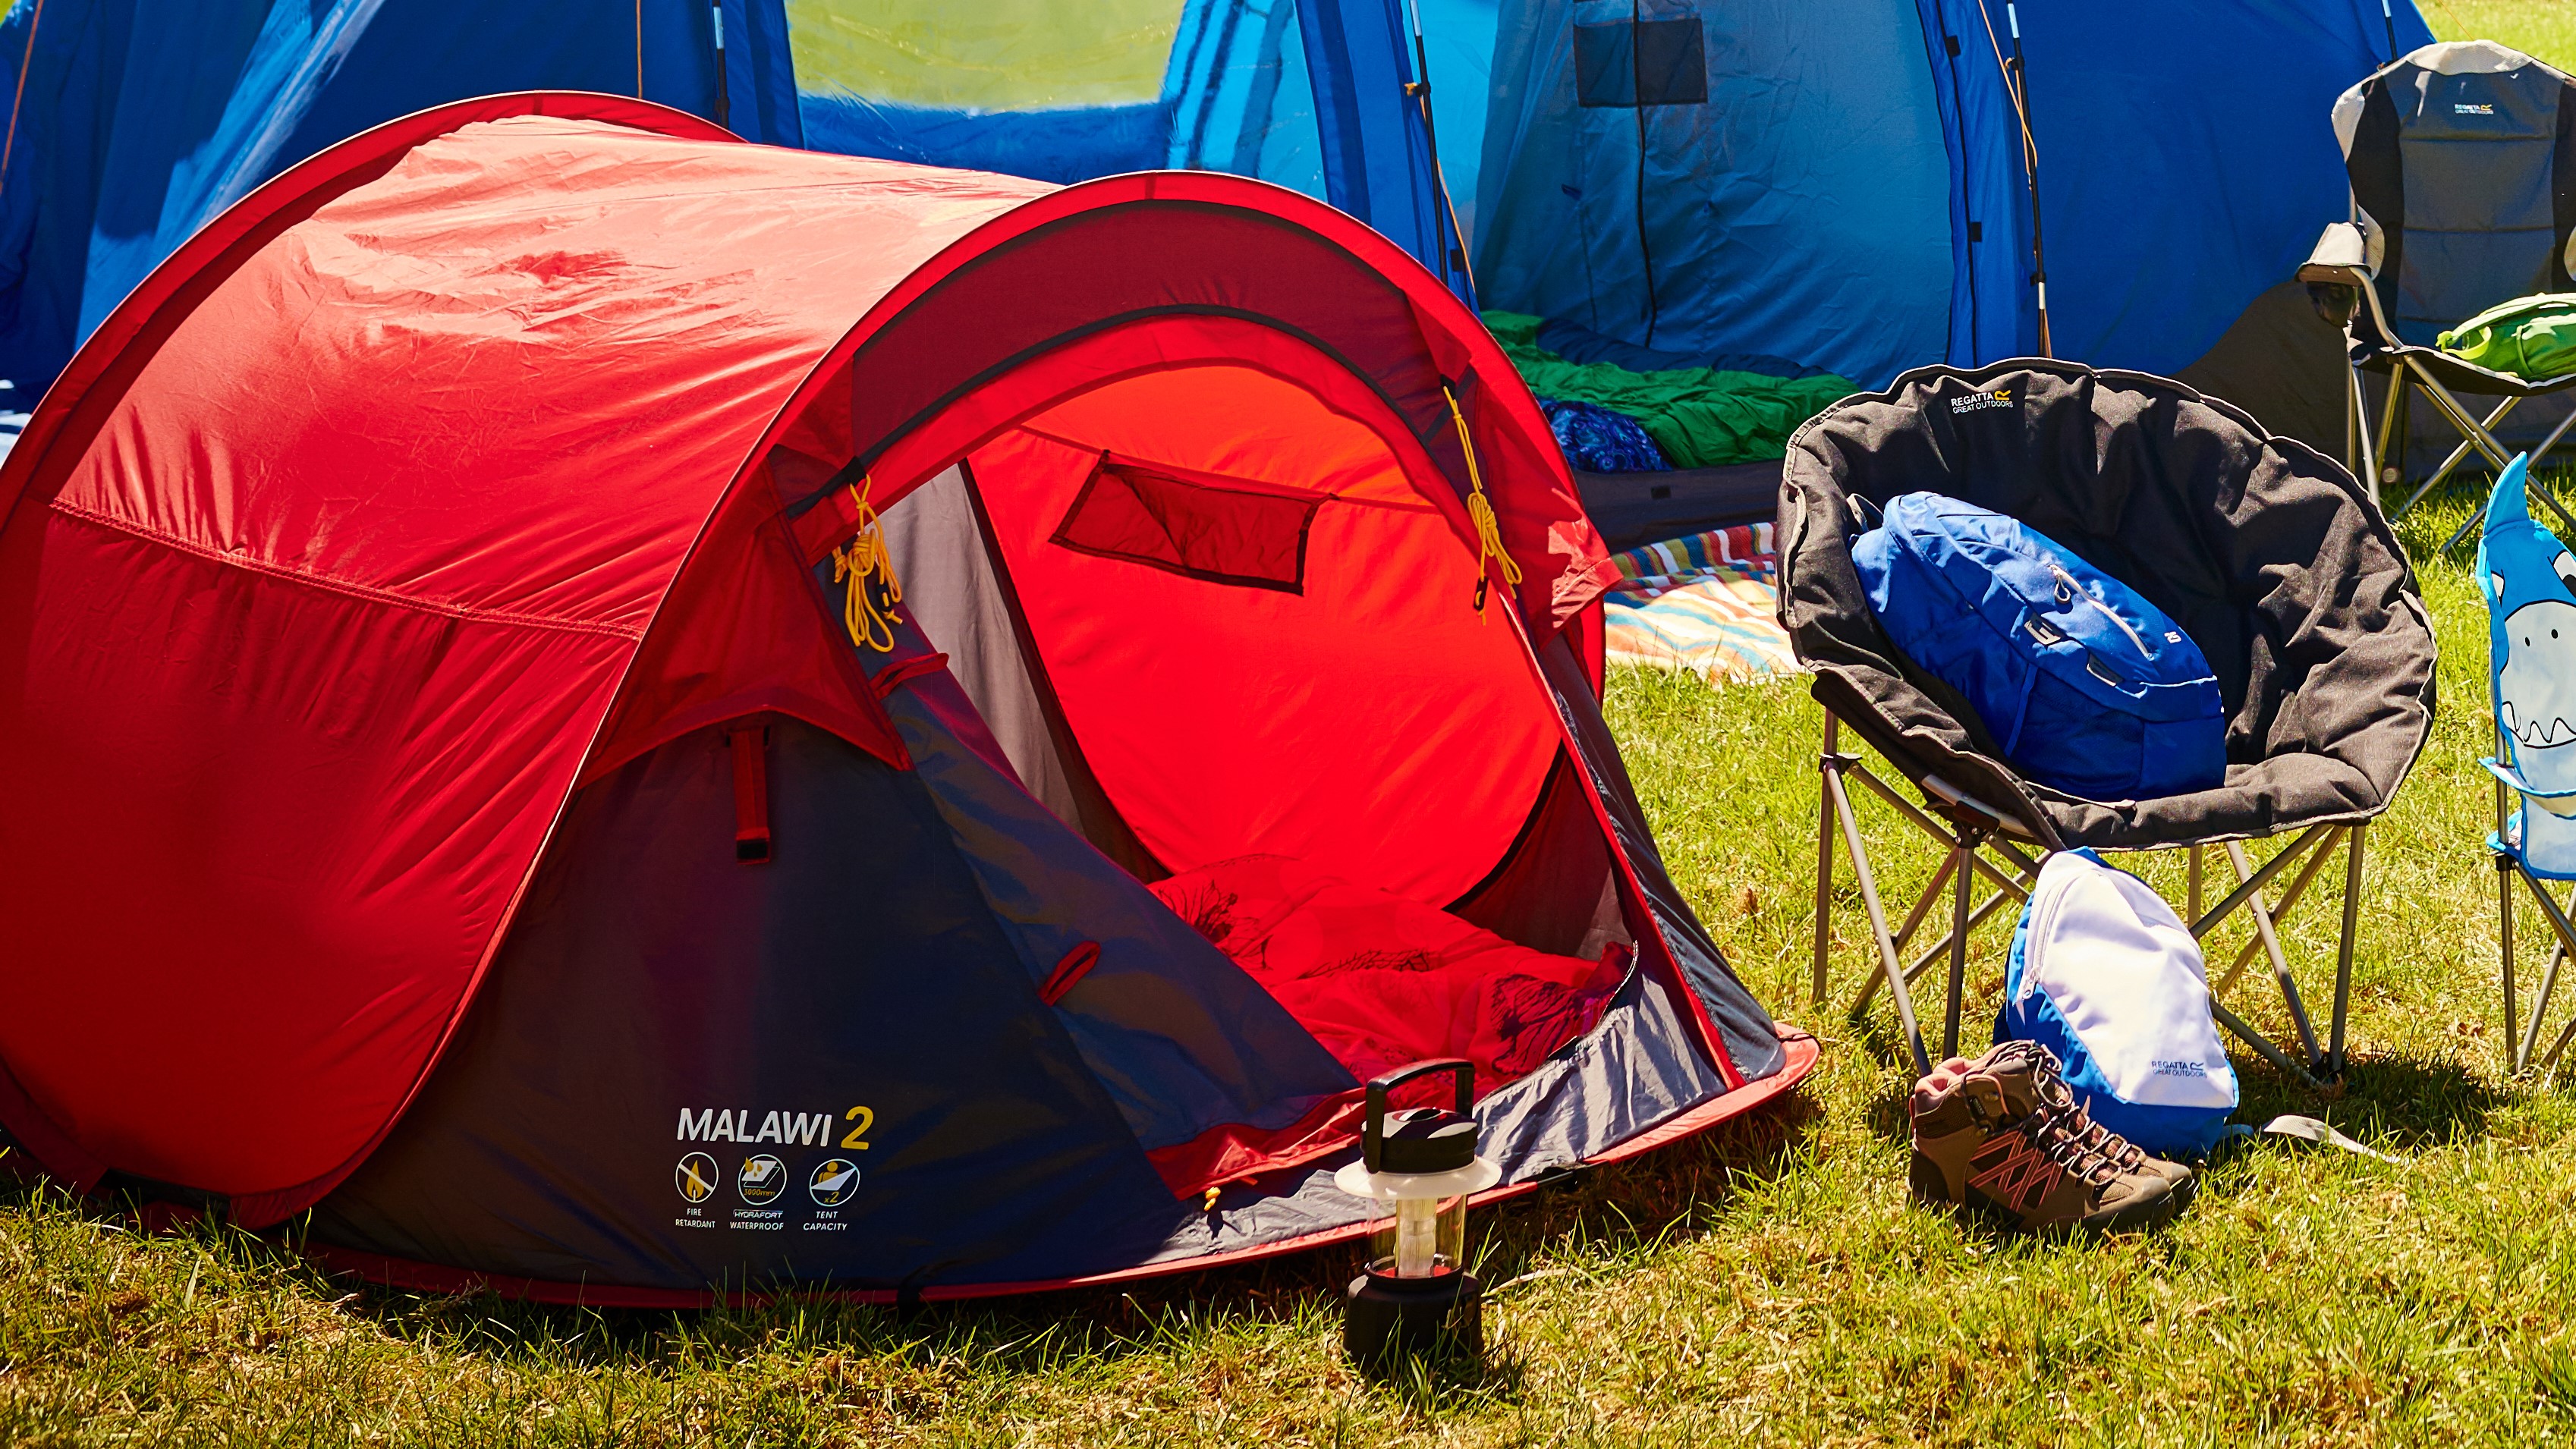 230cm x 140cm x 100cm Regatta Malawi 2 Man Pop Up Festival Tent Green RRP £110 